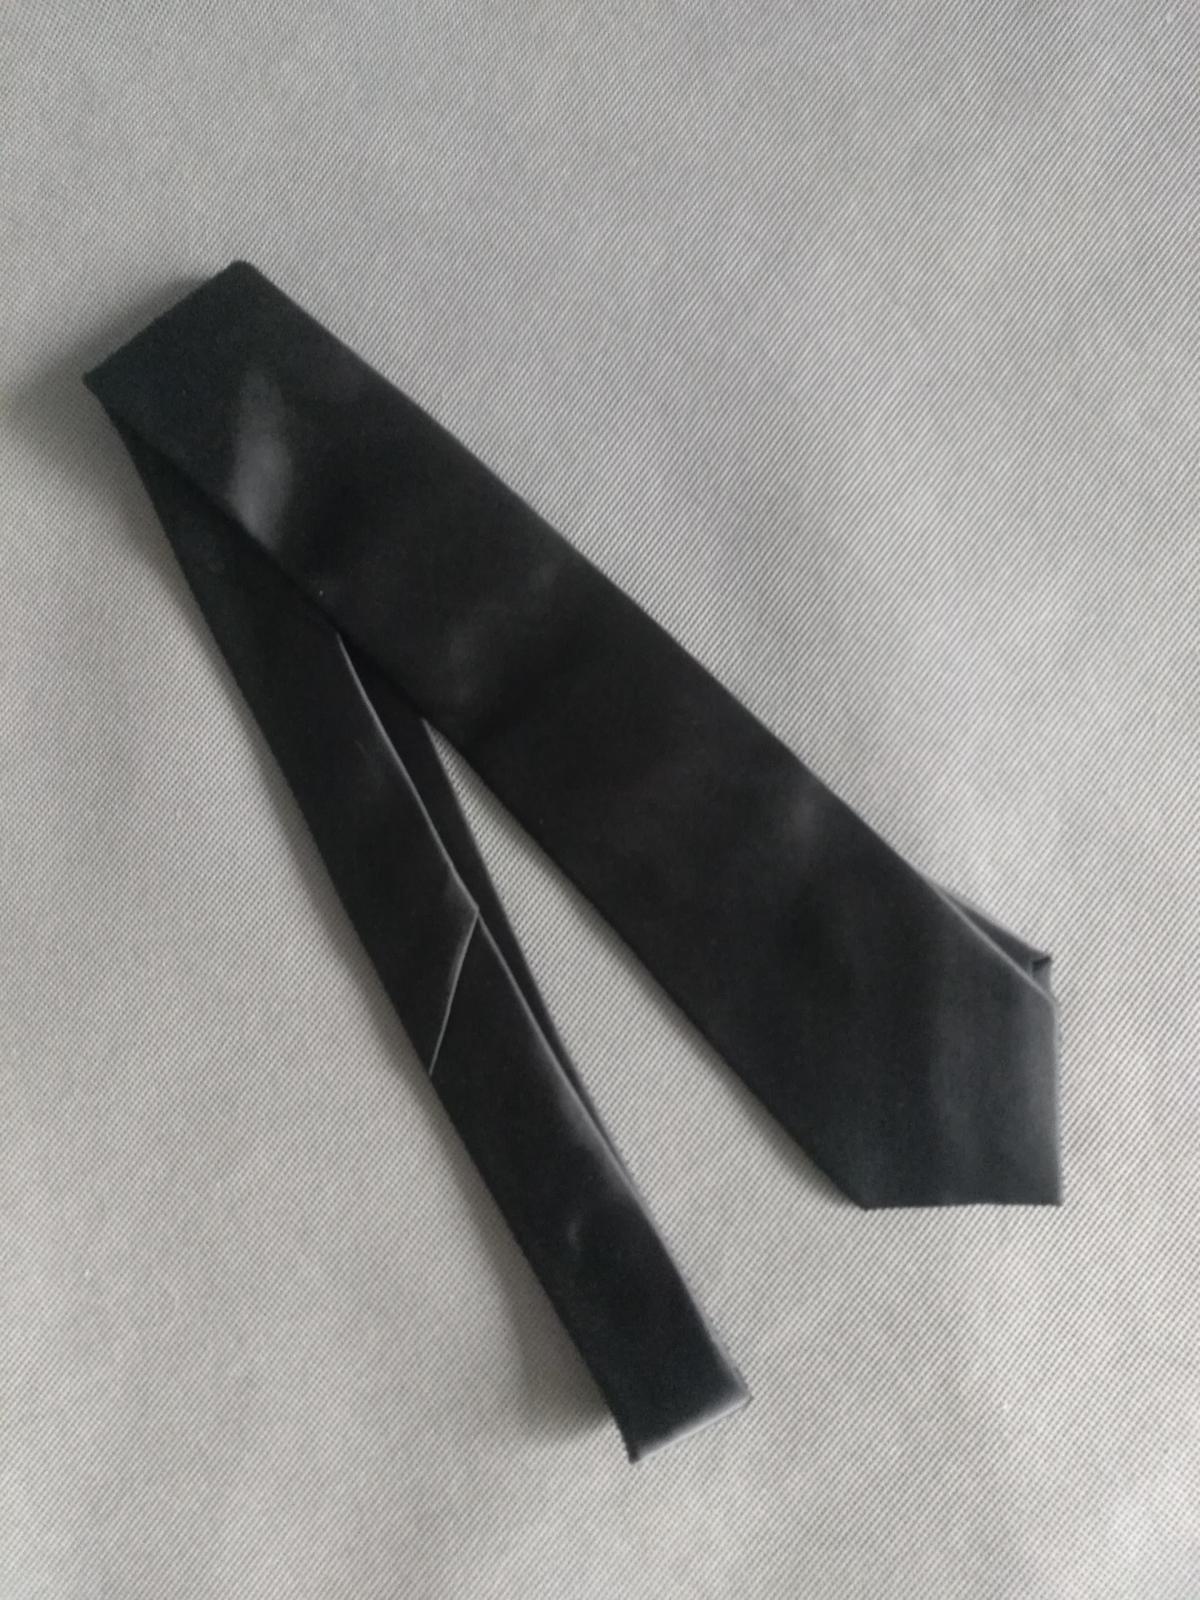 SKLADEM - černá pánská kravata - Obrázek č. 1